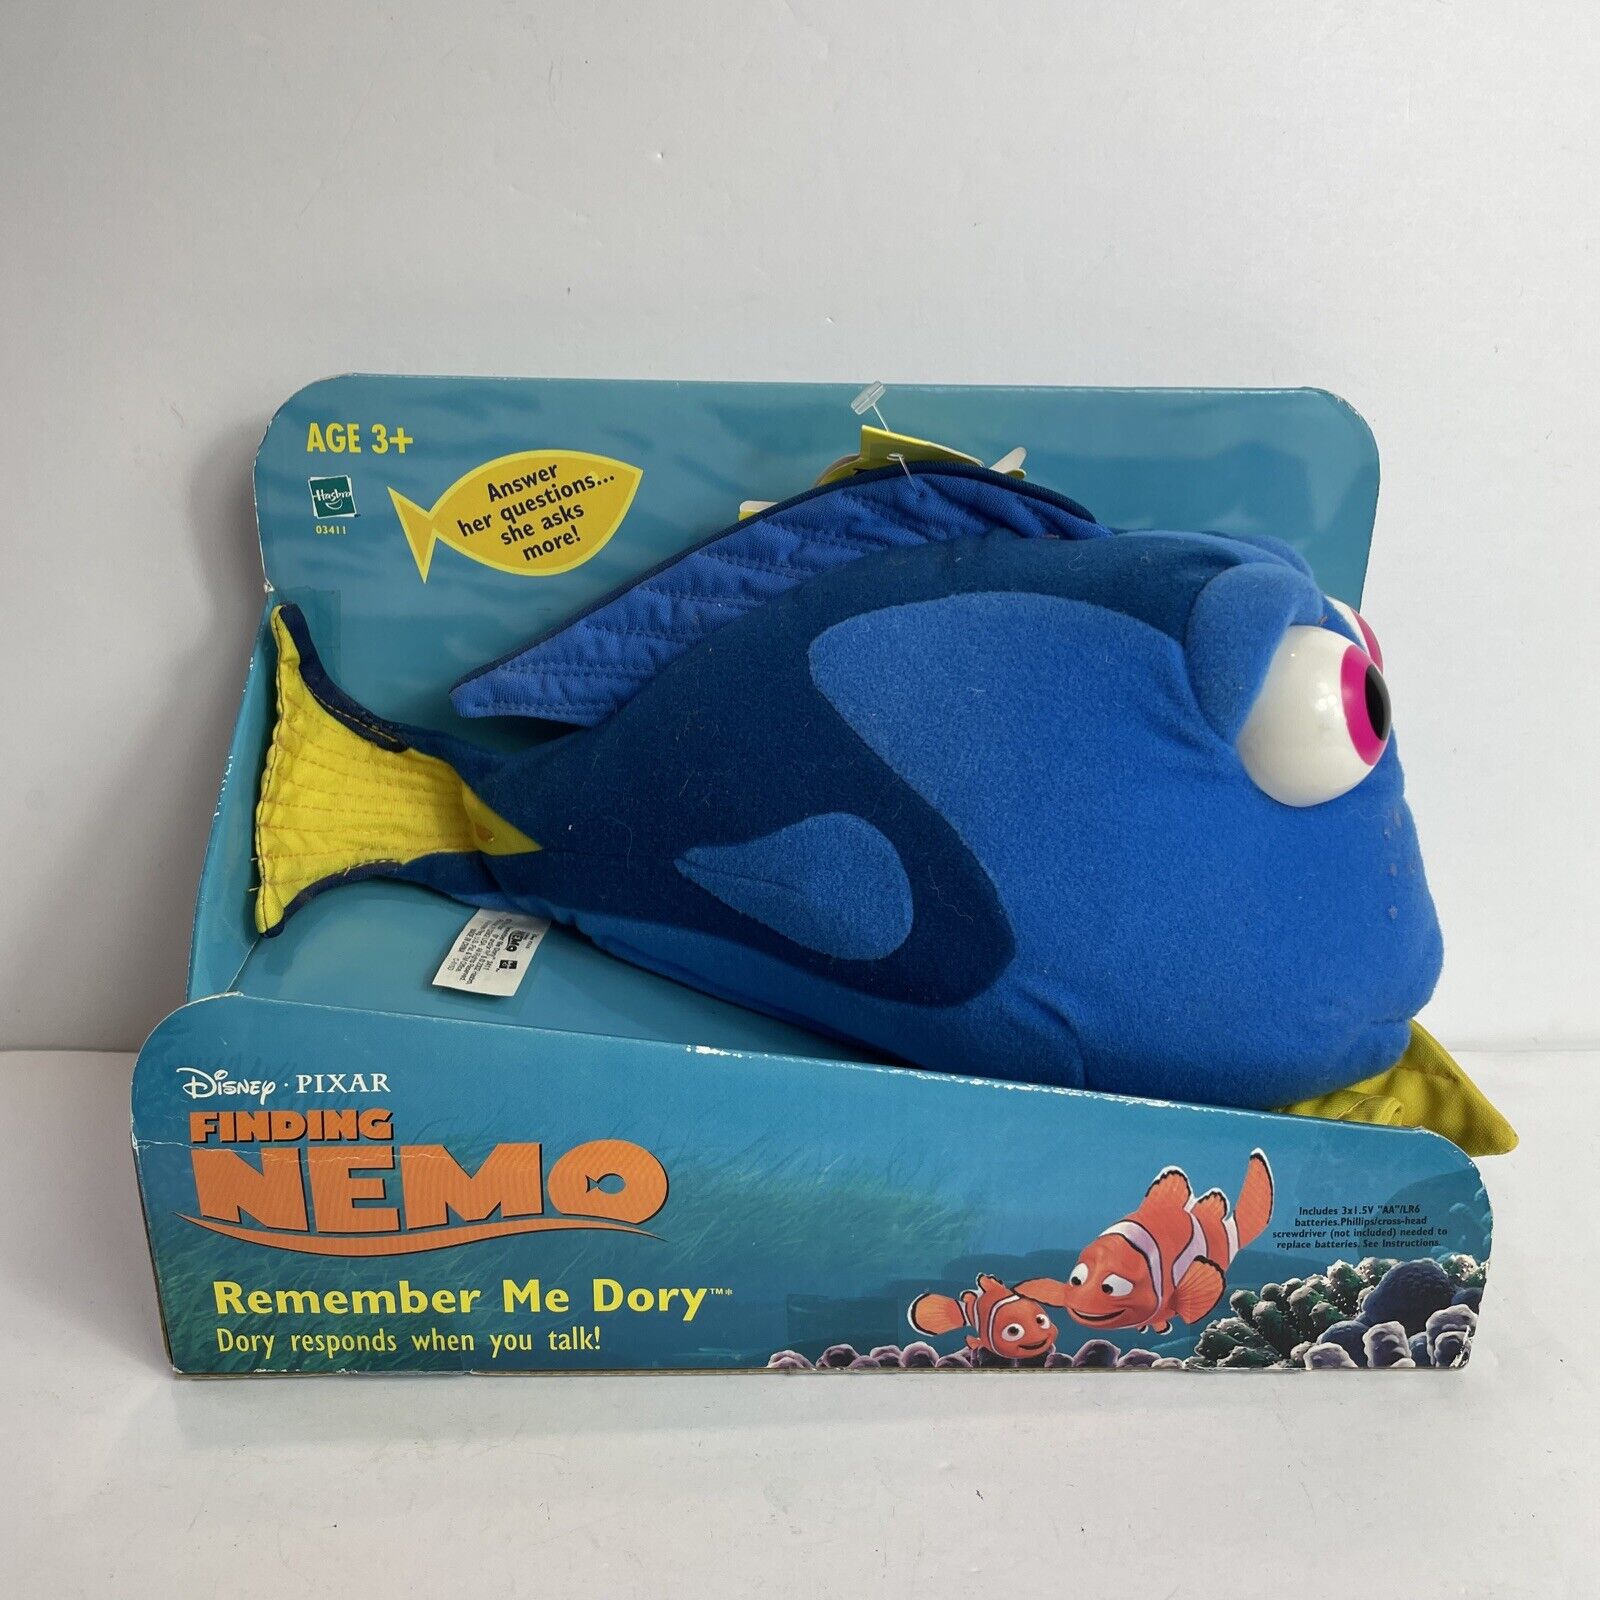 Retro Disney Hasbro Finding Nemo Talking Dory Plush 2002 New With Tags